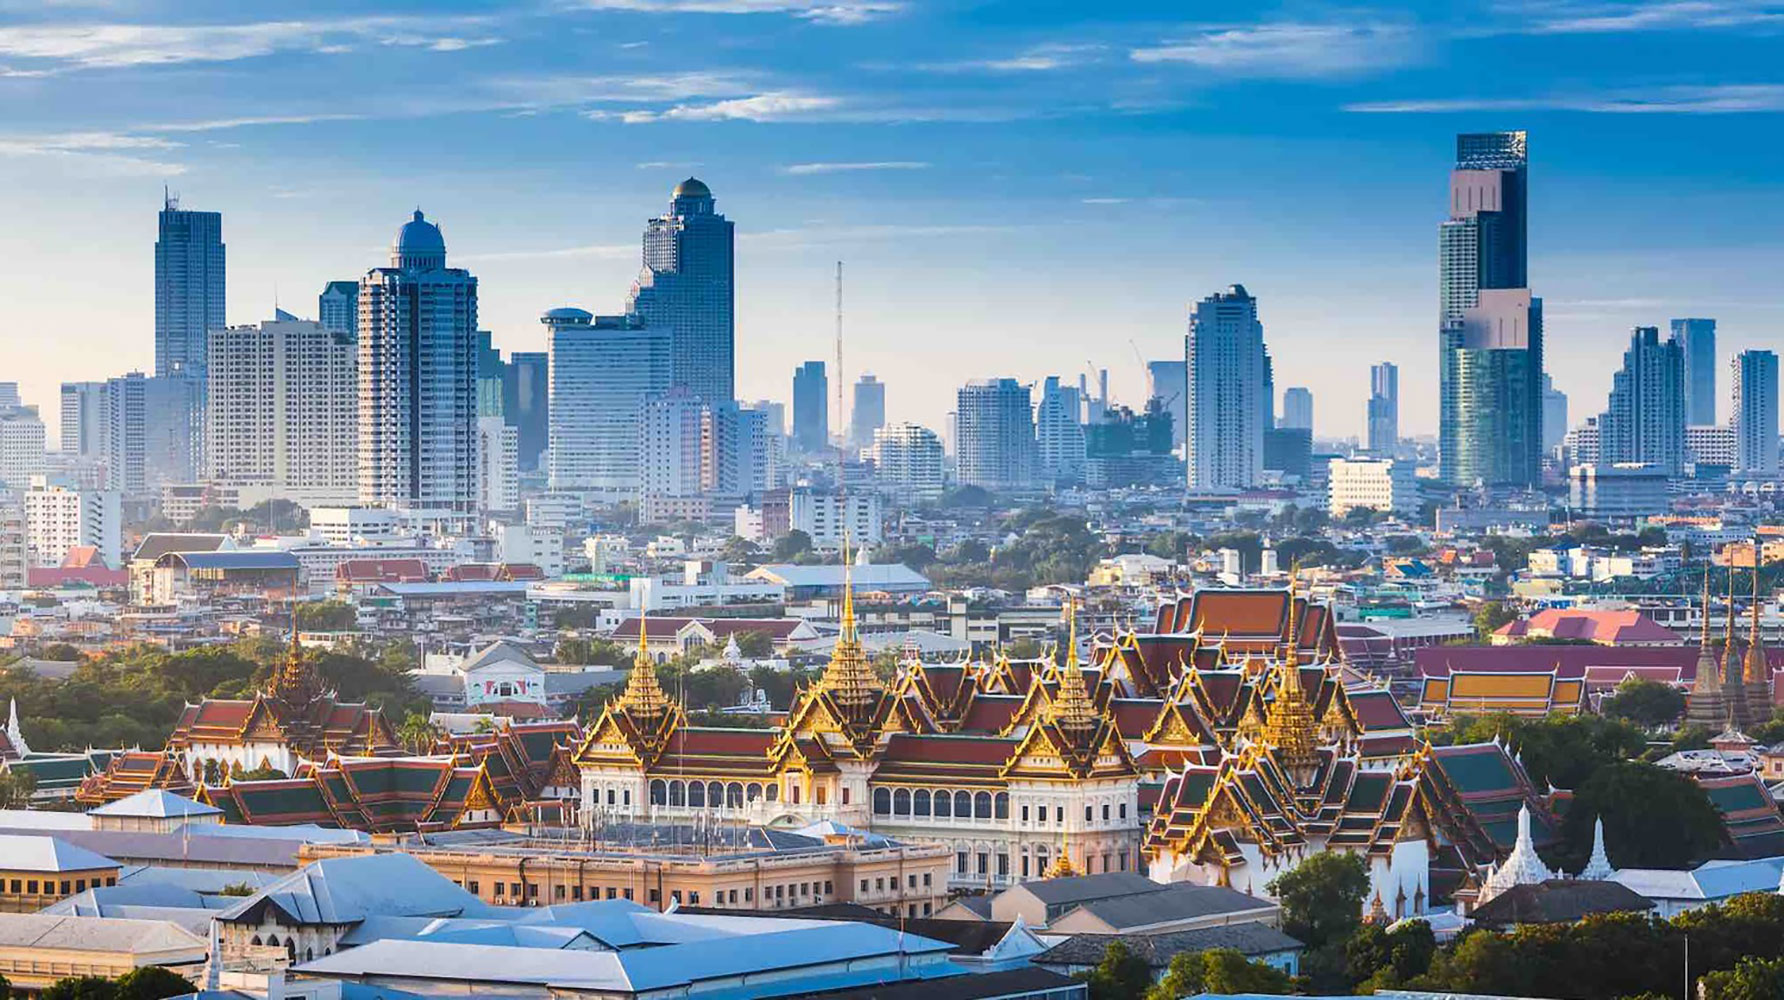 Urban temple filming location in Bangkok Thailand